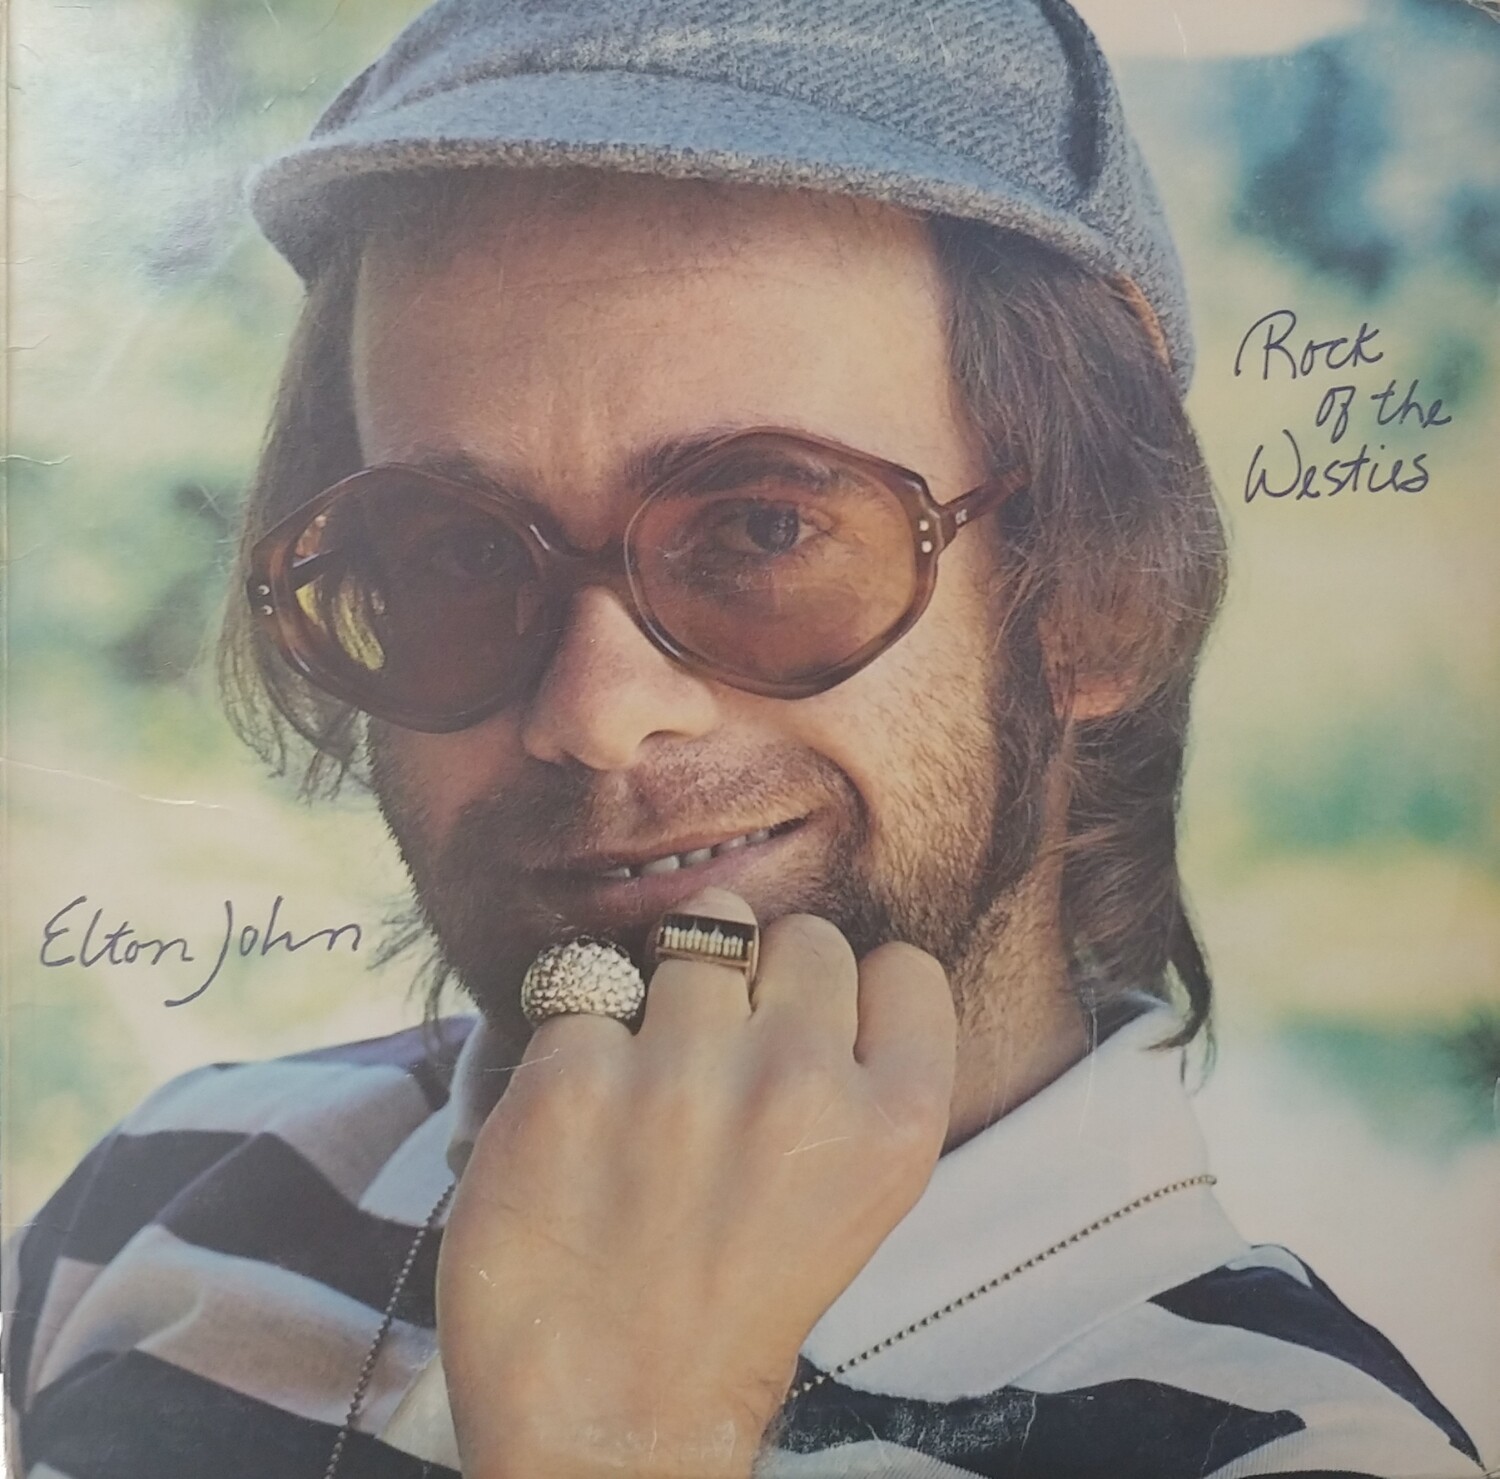 Elton John - Rock of the westies